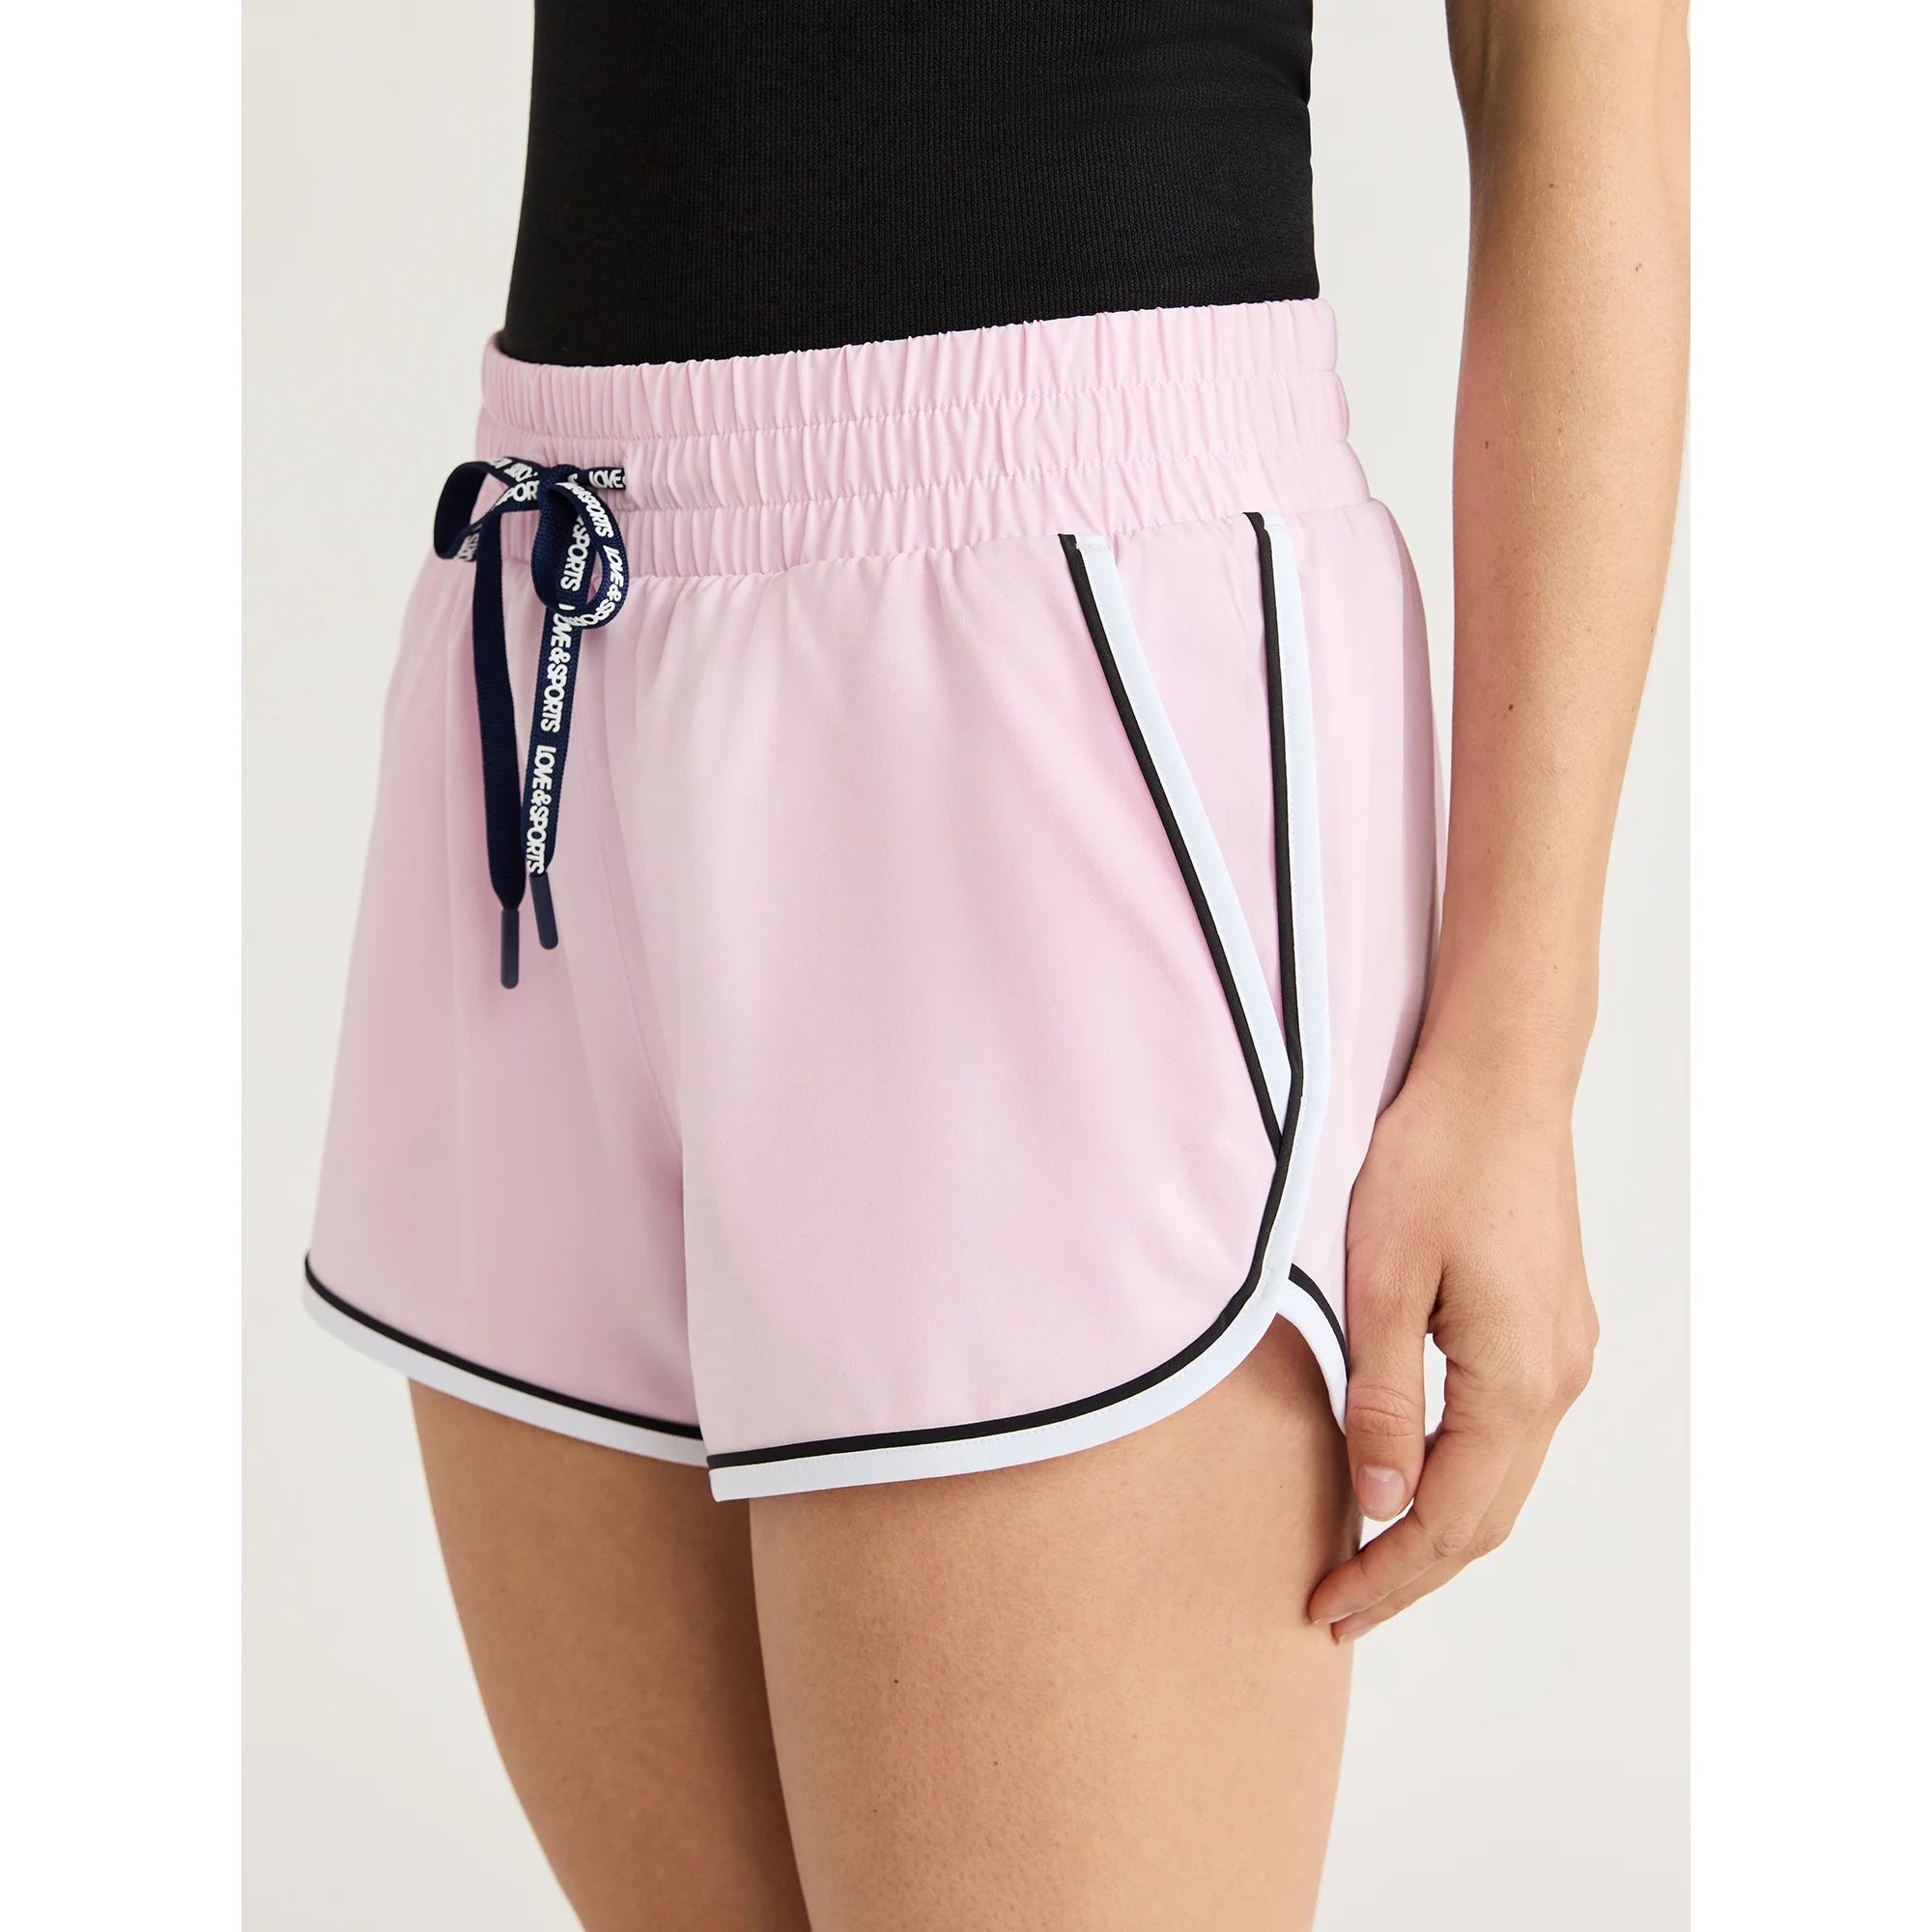 Love & Sports Women's Vintage-Inspired Piped Running Shorts, 3” Inseam, Sizes XS-XXXL | Walmart (US)